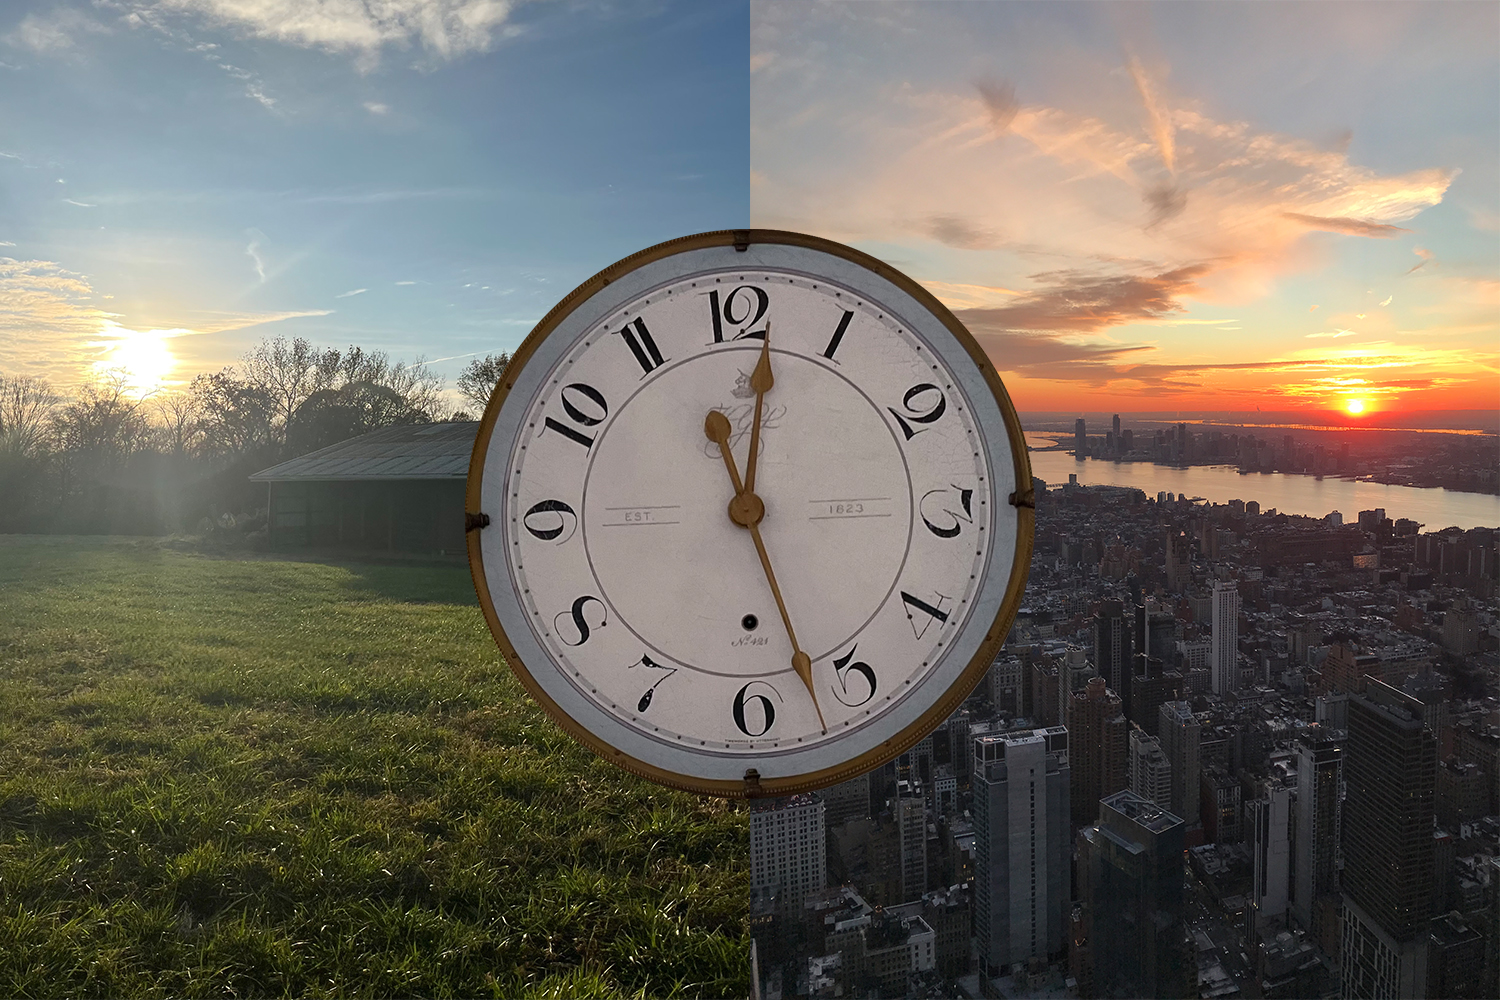 Great time debate: Should we make daylight saving time permanent?